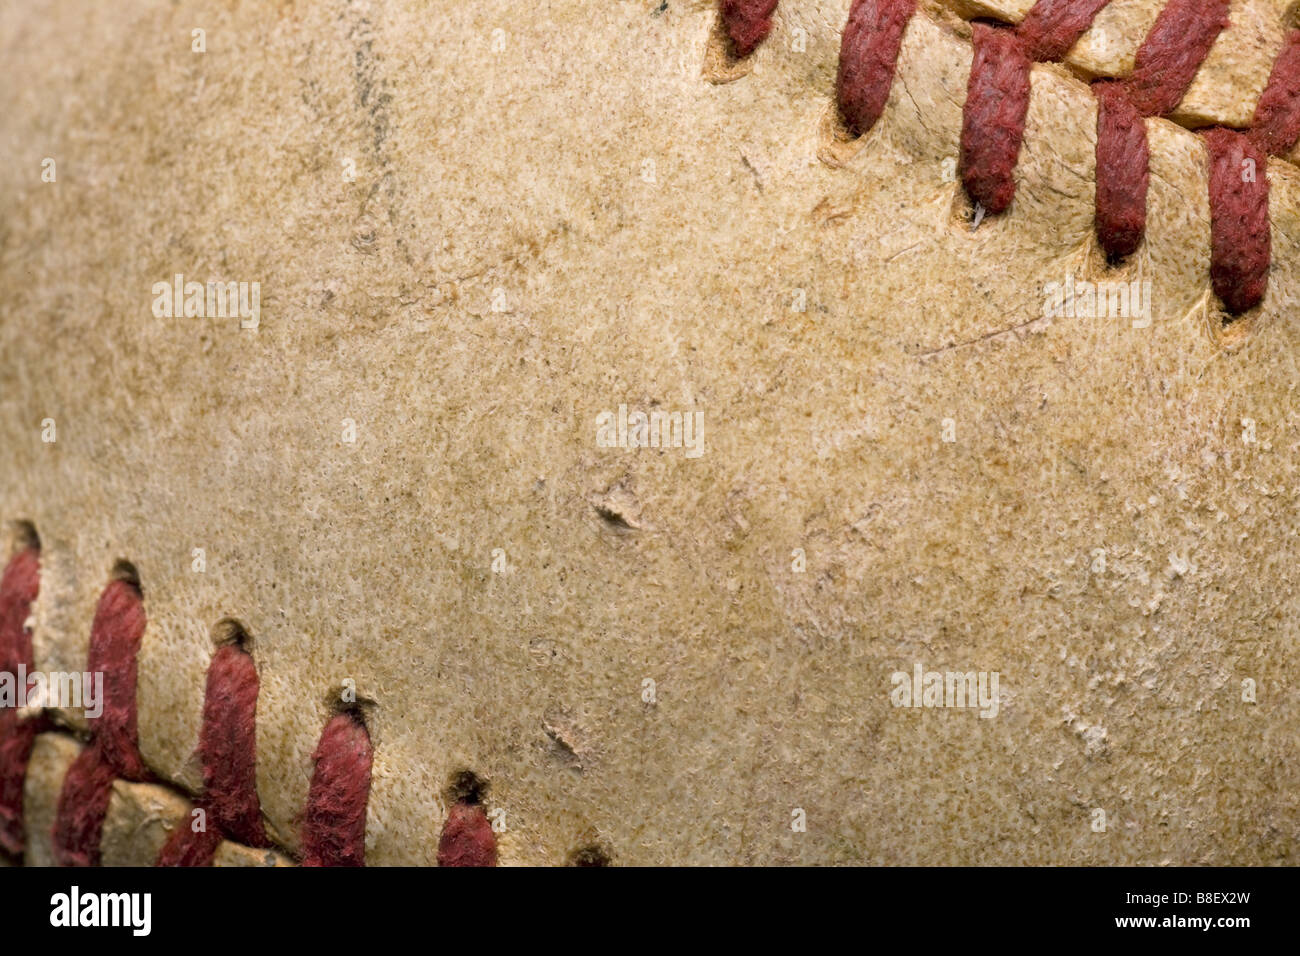 softball with red stitching baseball isolated on white background Stock Photo